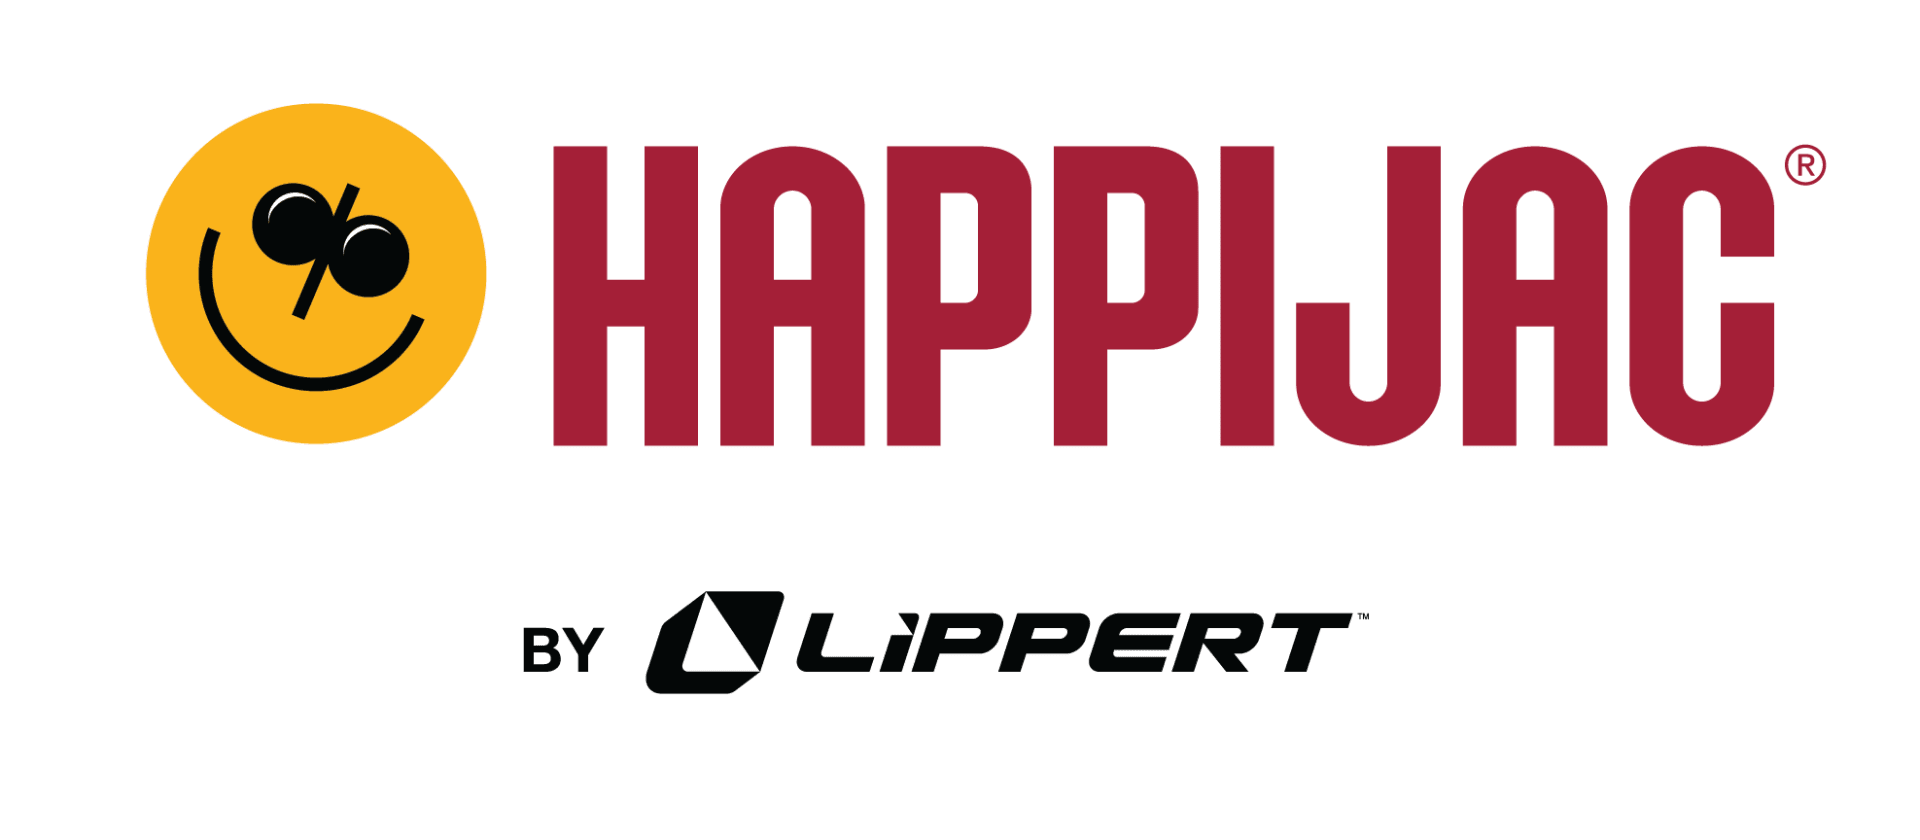 Happijac by Lippert Brand Logo